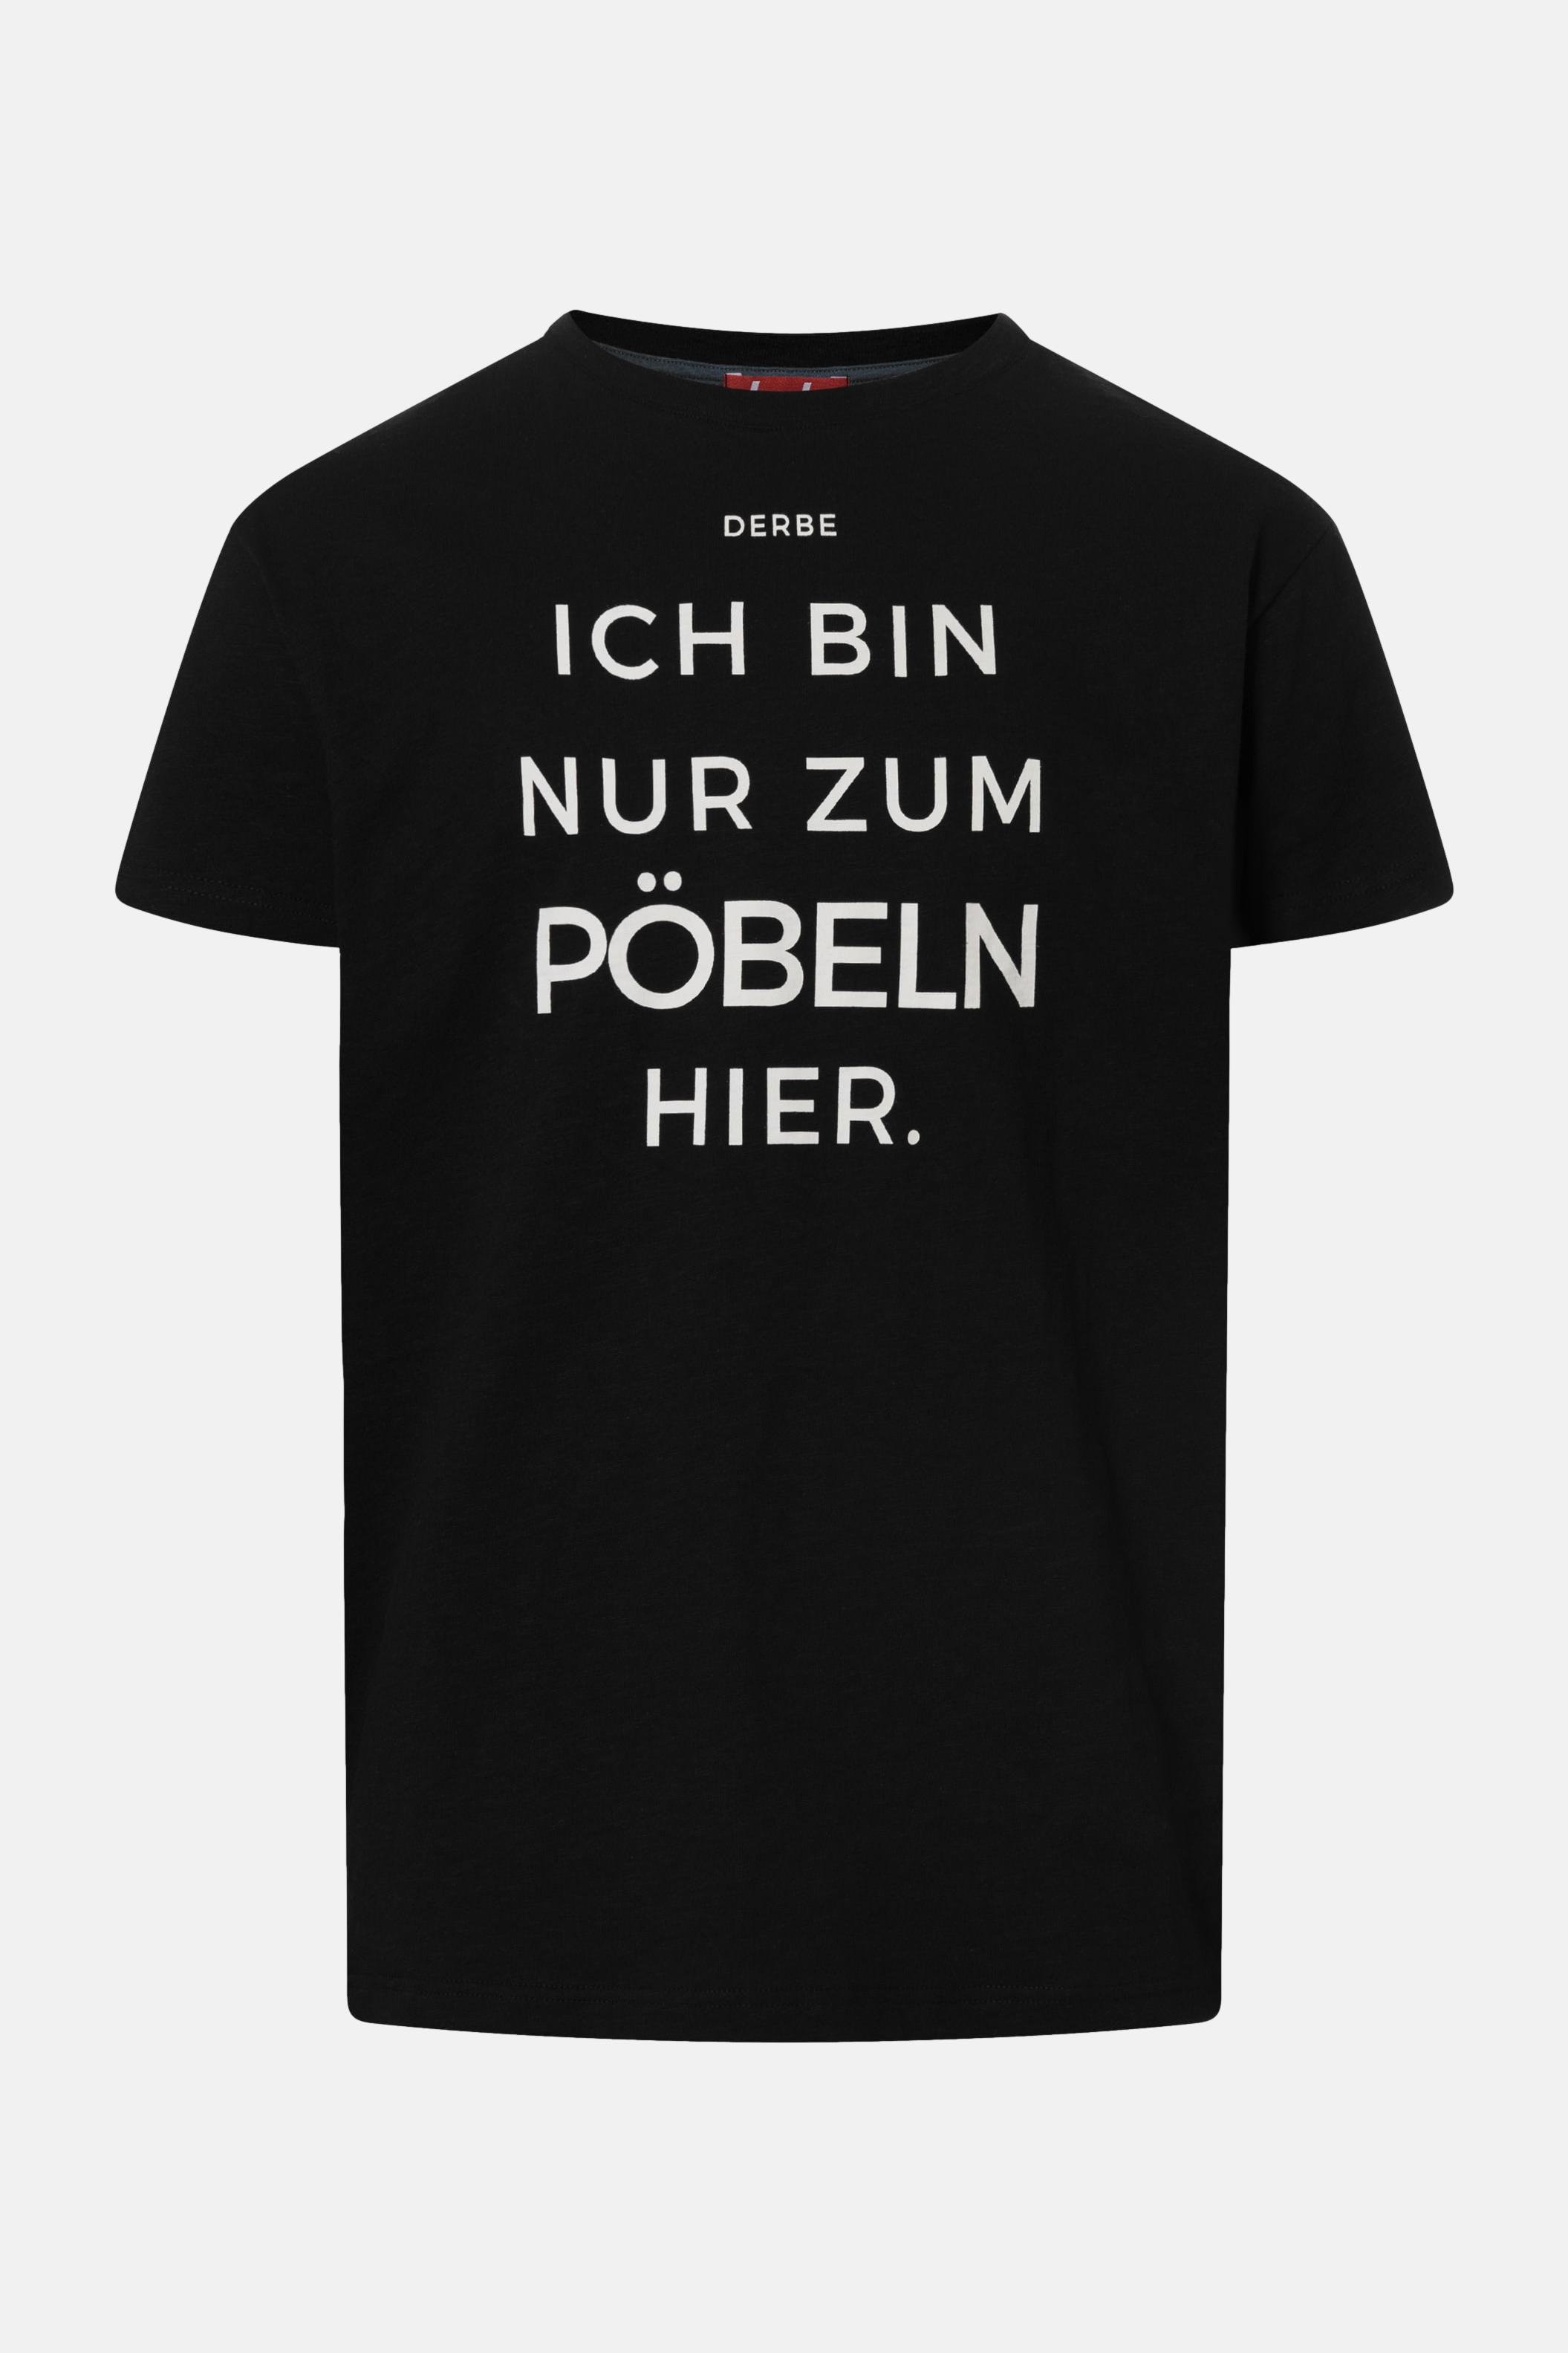 Pöbeln Herren T-Shirt Black Schwarz |